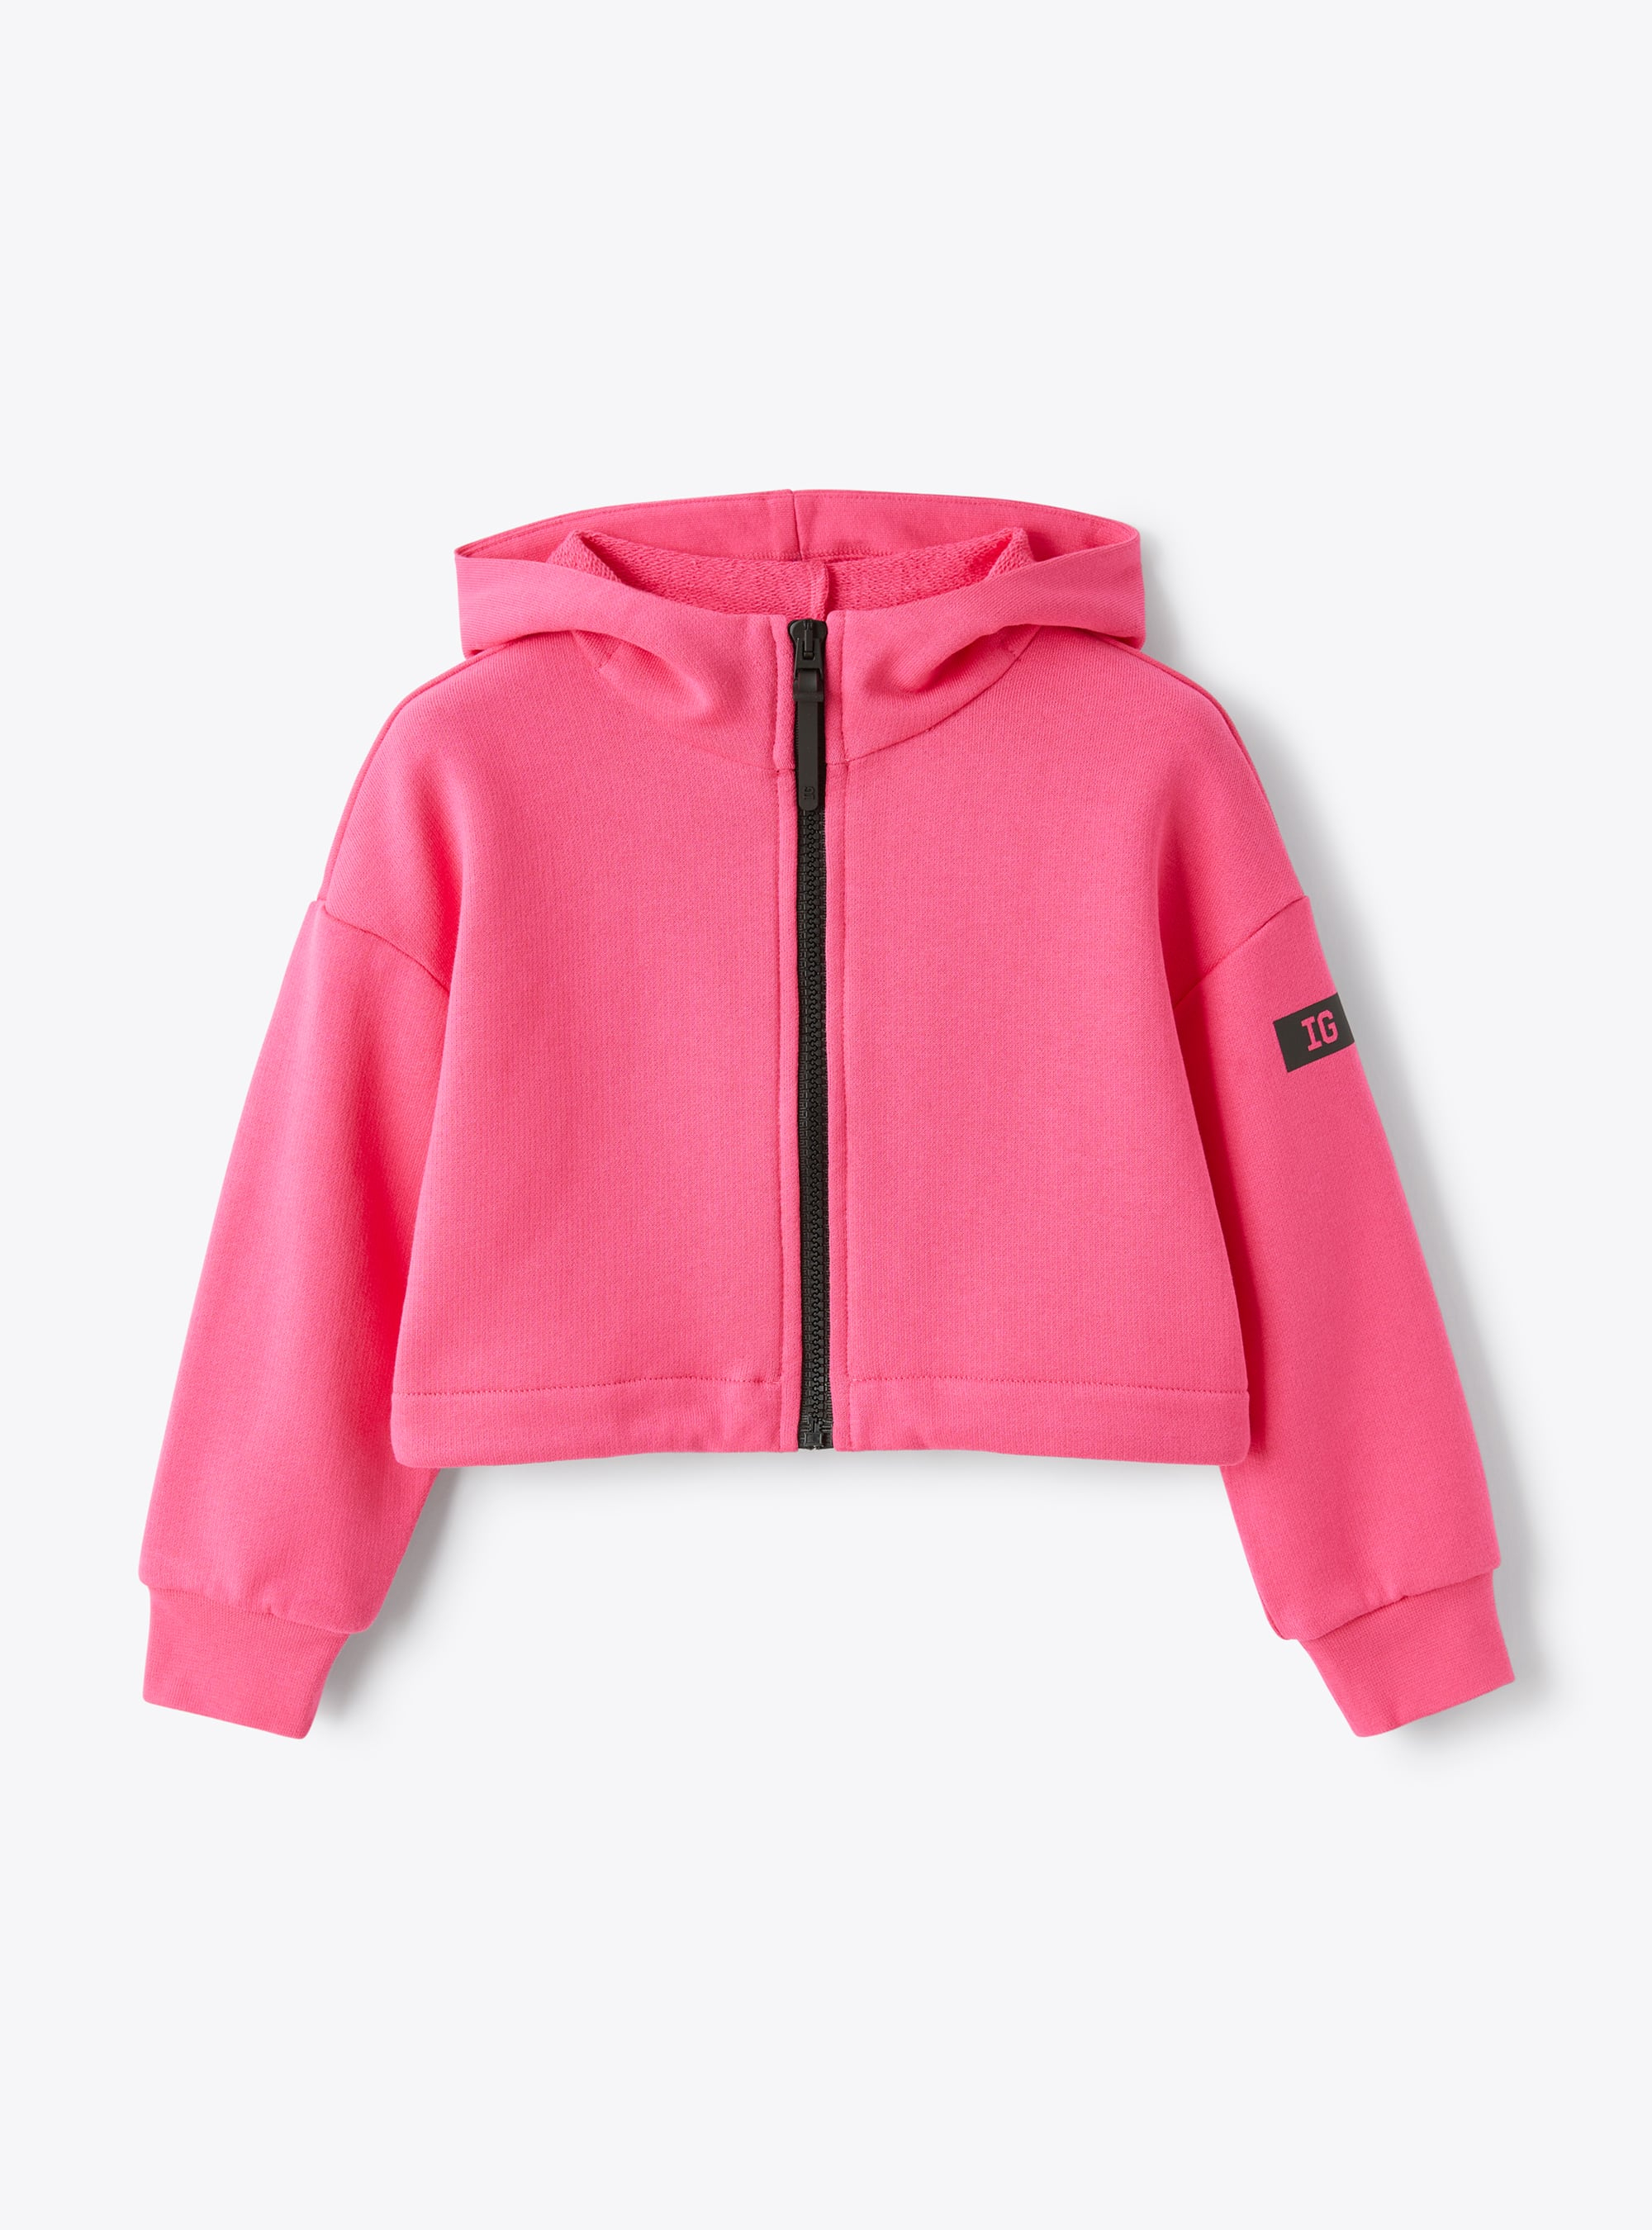 Full-zip fleece jacket in fuchsia pink - Sweatshirts - Il Gufo